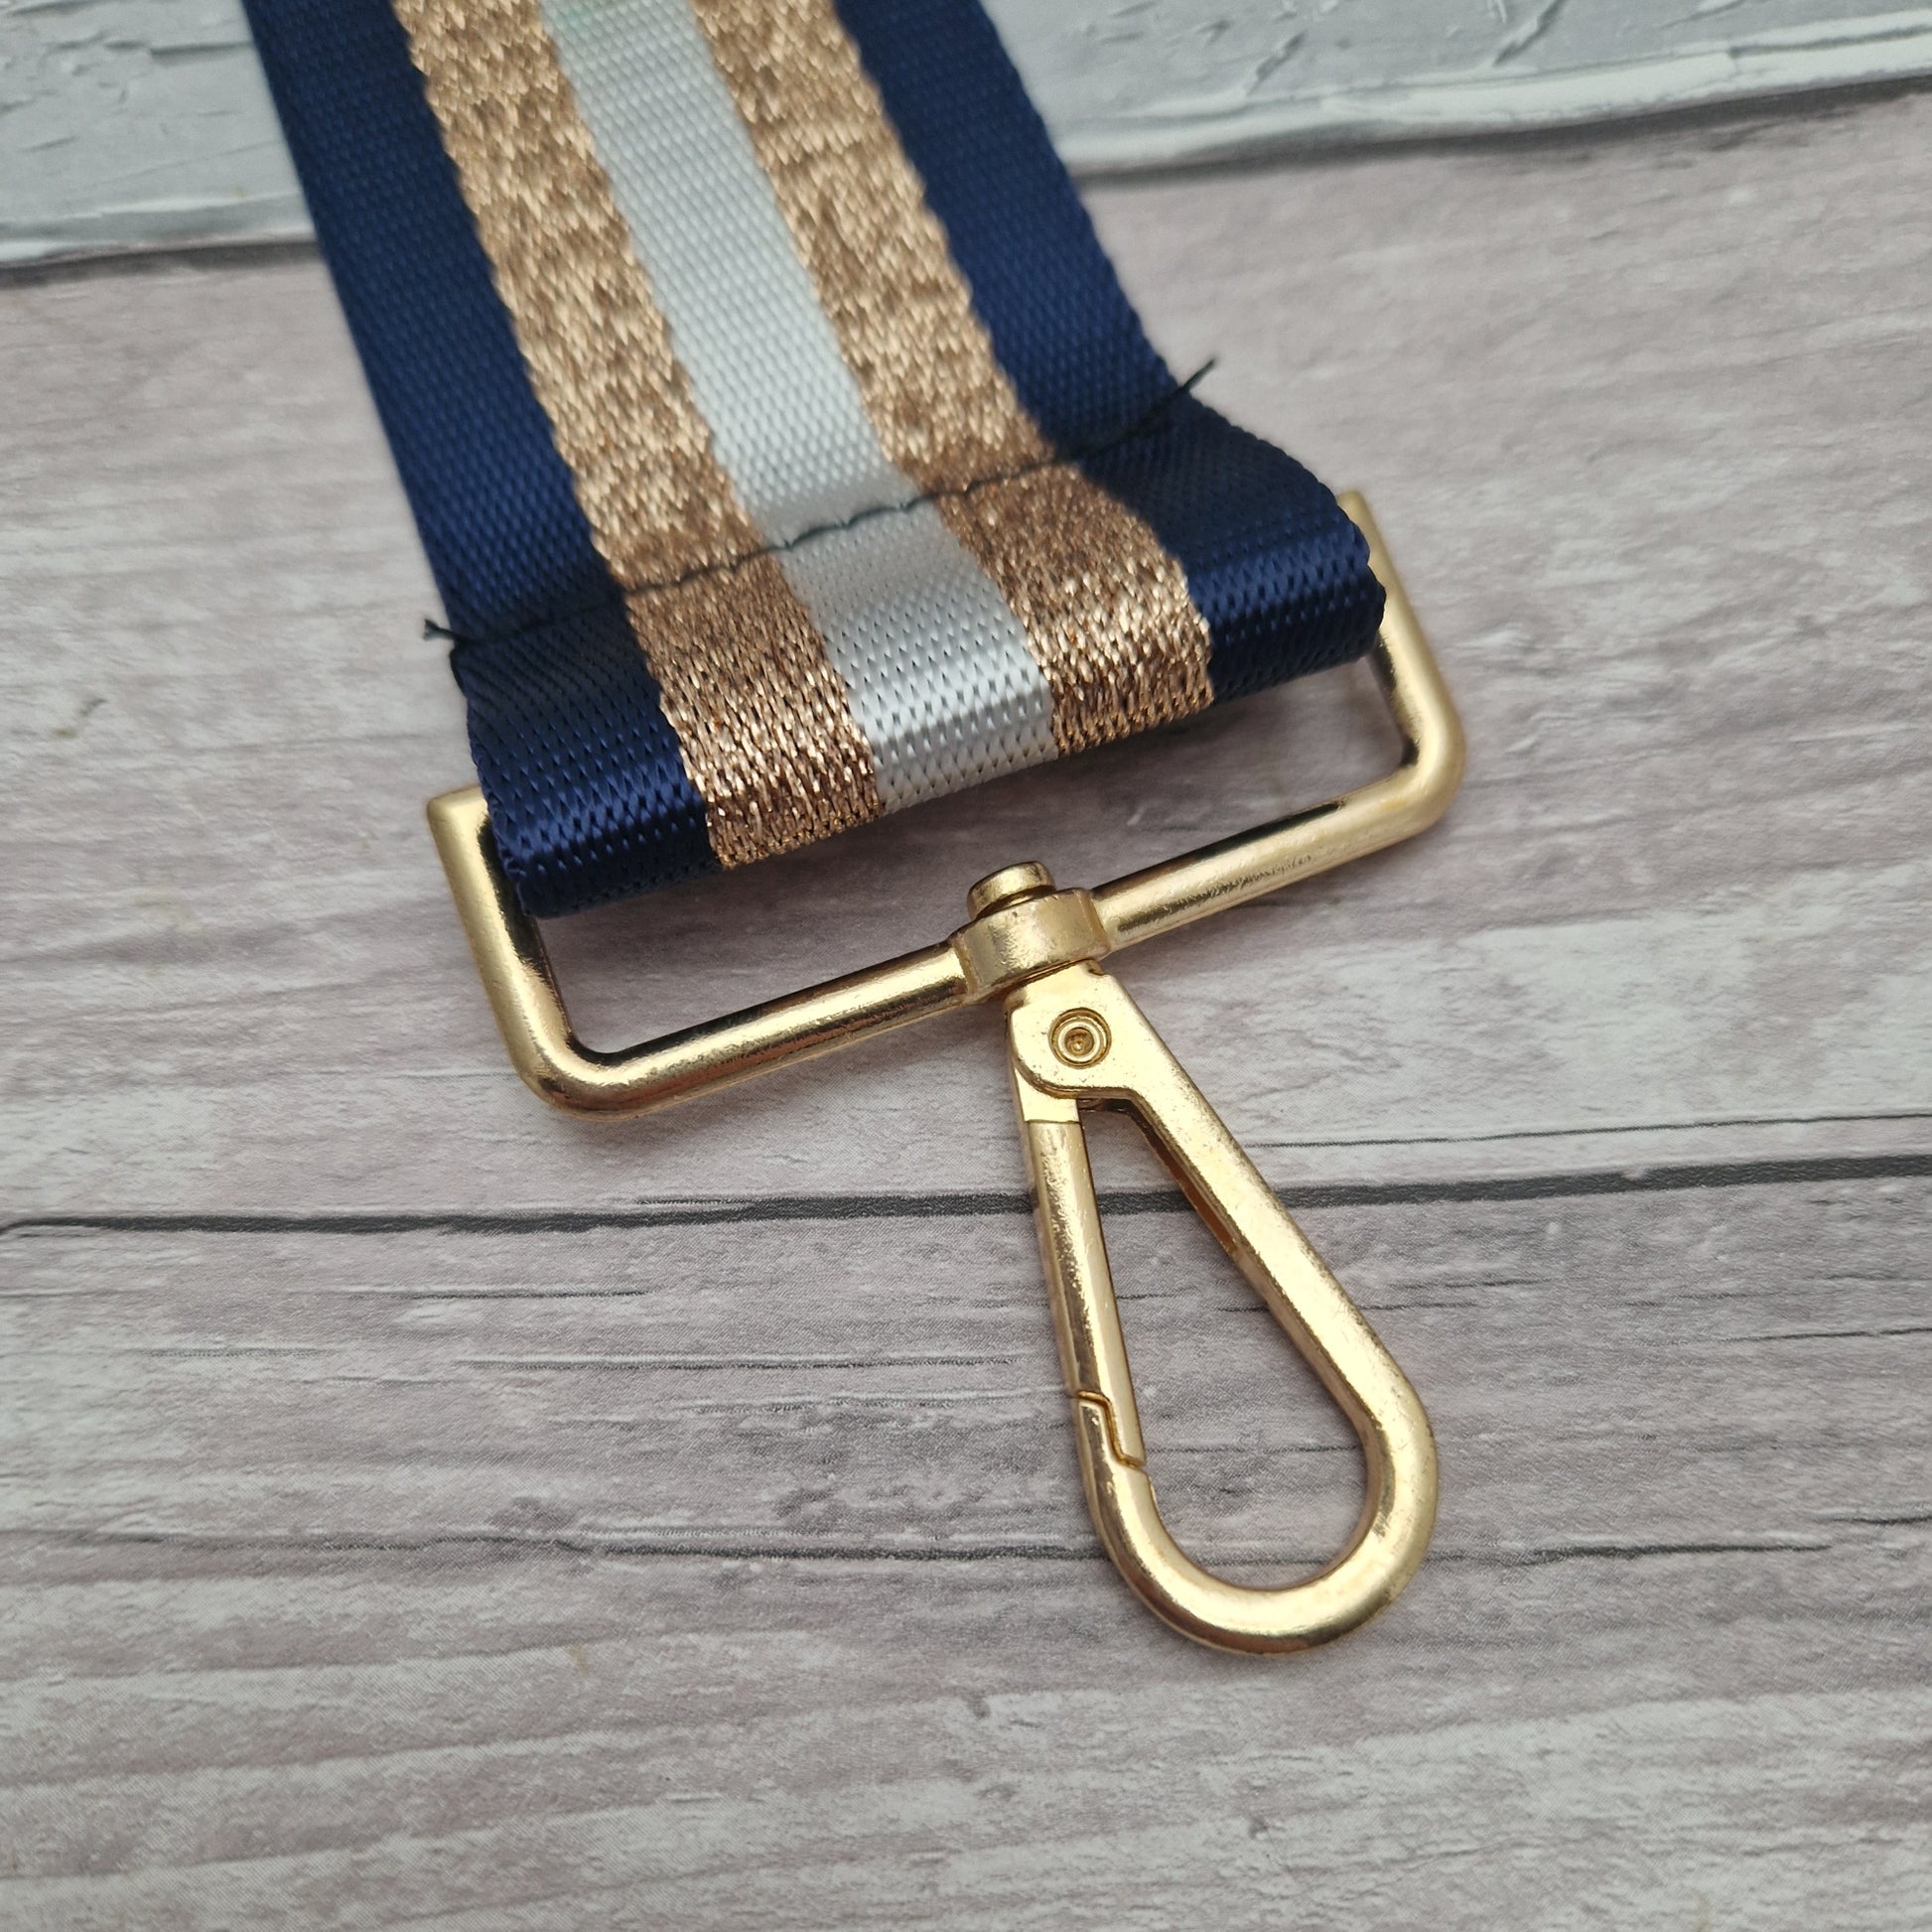 Bag strap with Navy, white and metallic bronze stripe.